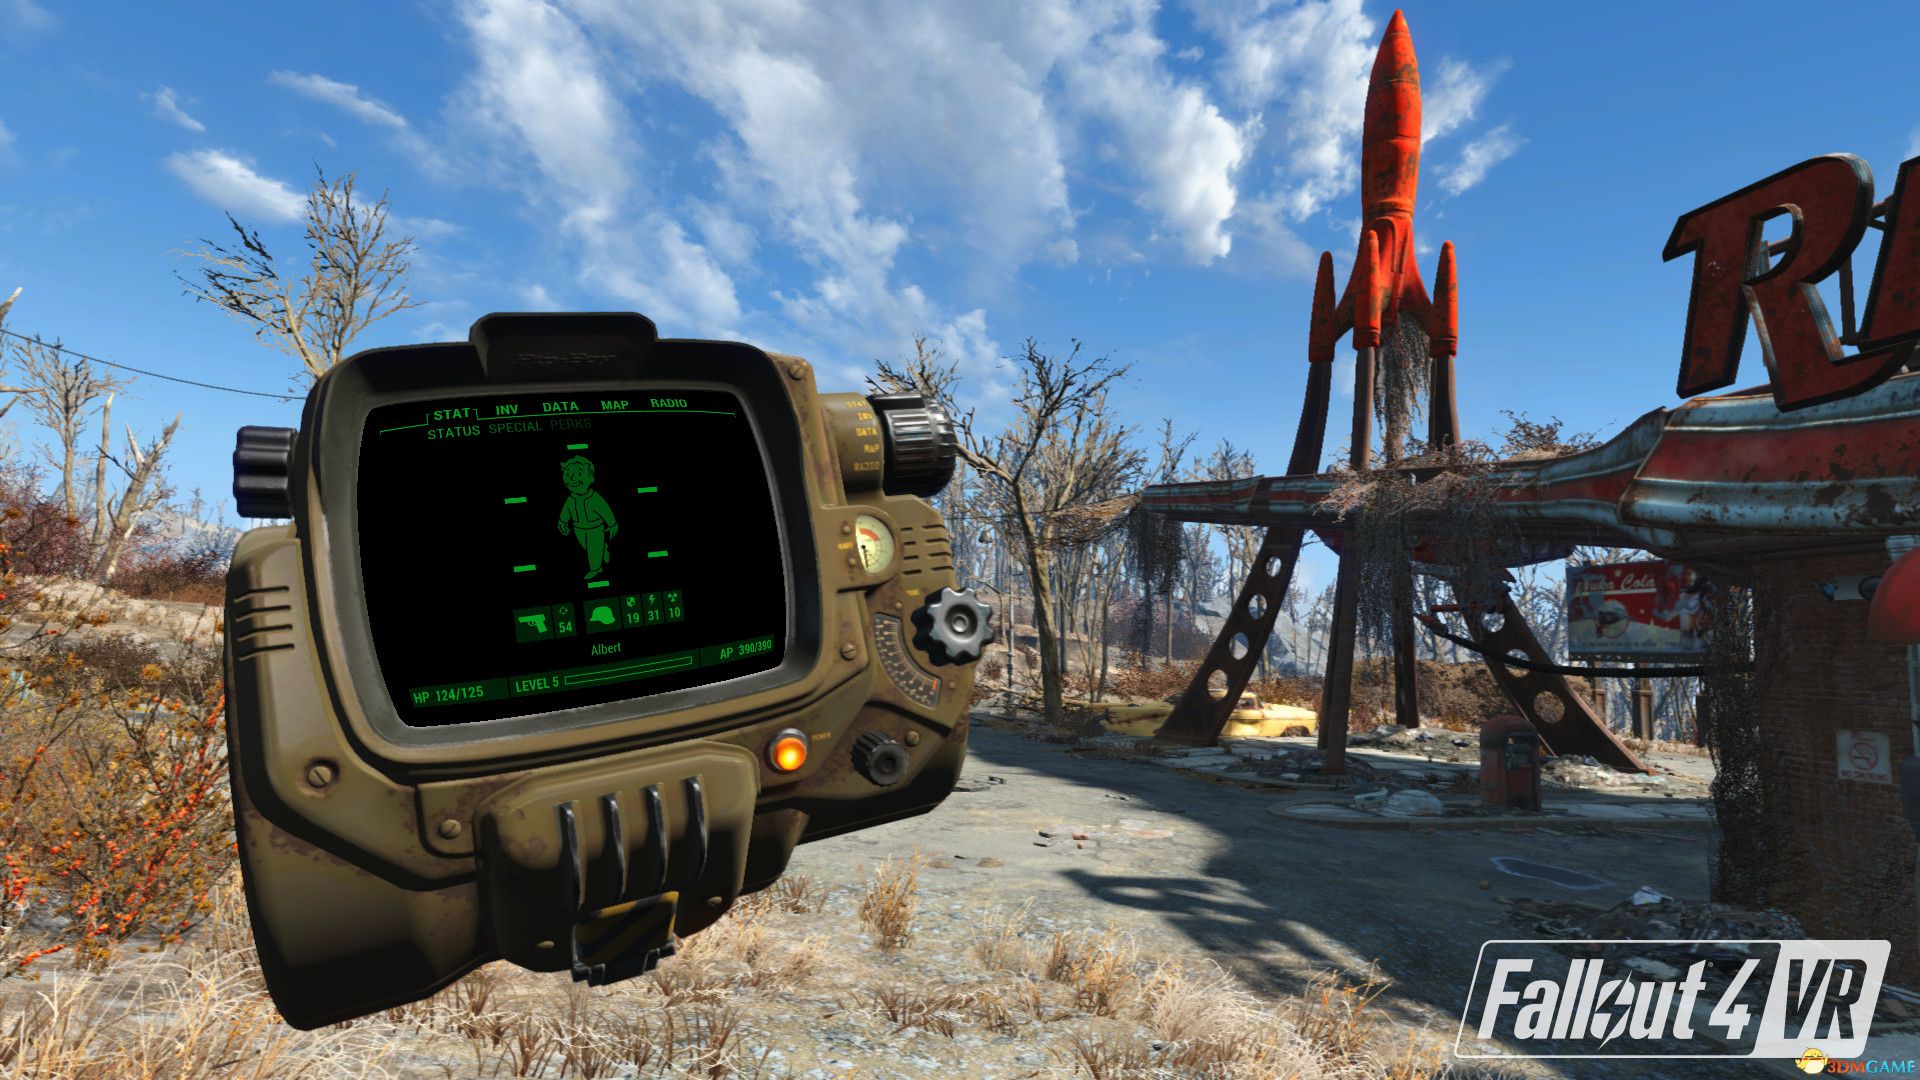 03 31 辐射4vr Fallout 4 Vr Vrex镜像版 Tw En Jp 辐射4 3dmgame论坛 Powered By Discuz